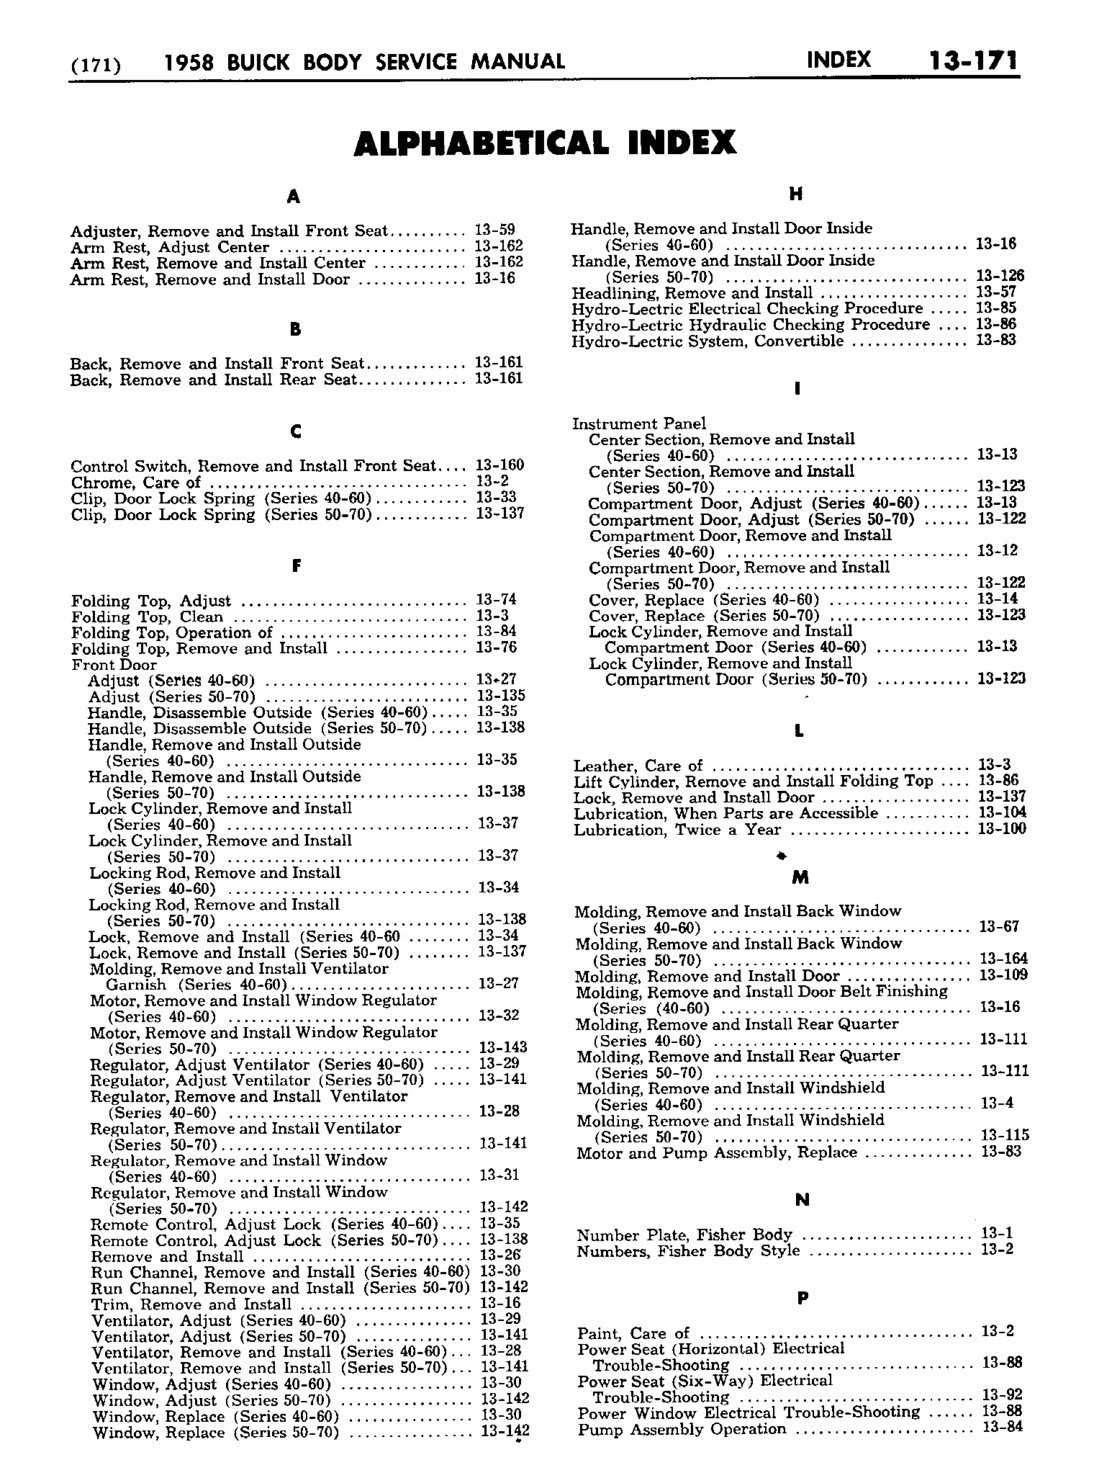 n_1958 Buick Body Service Manual-172-172.jpg